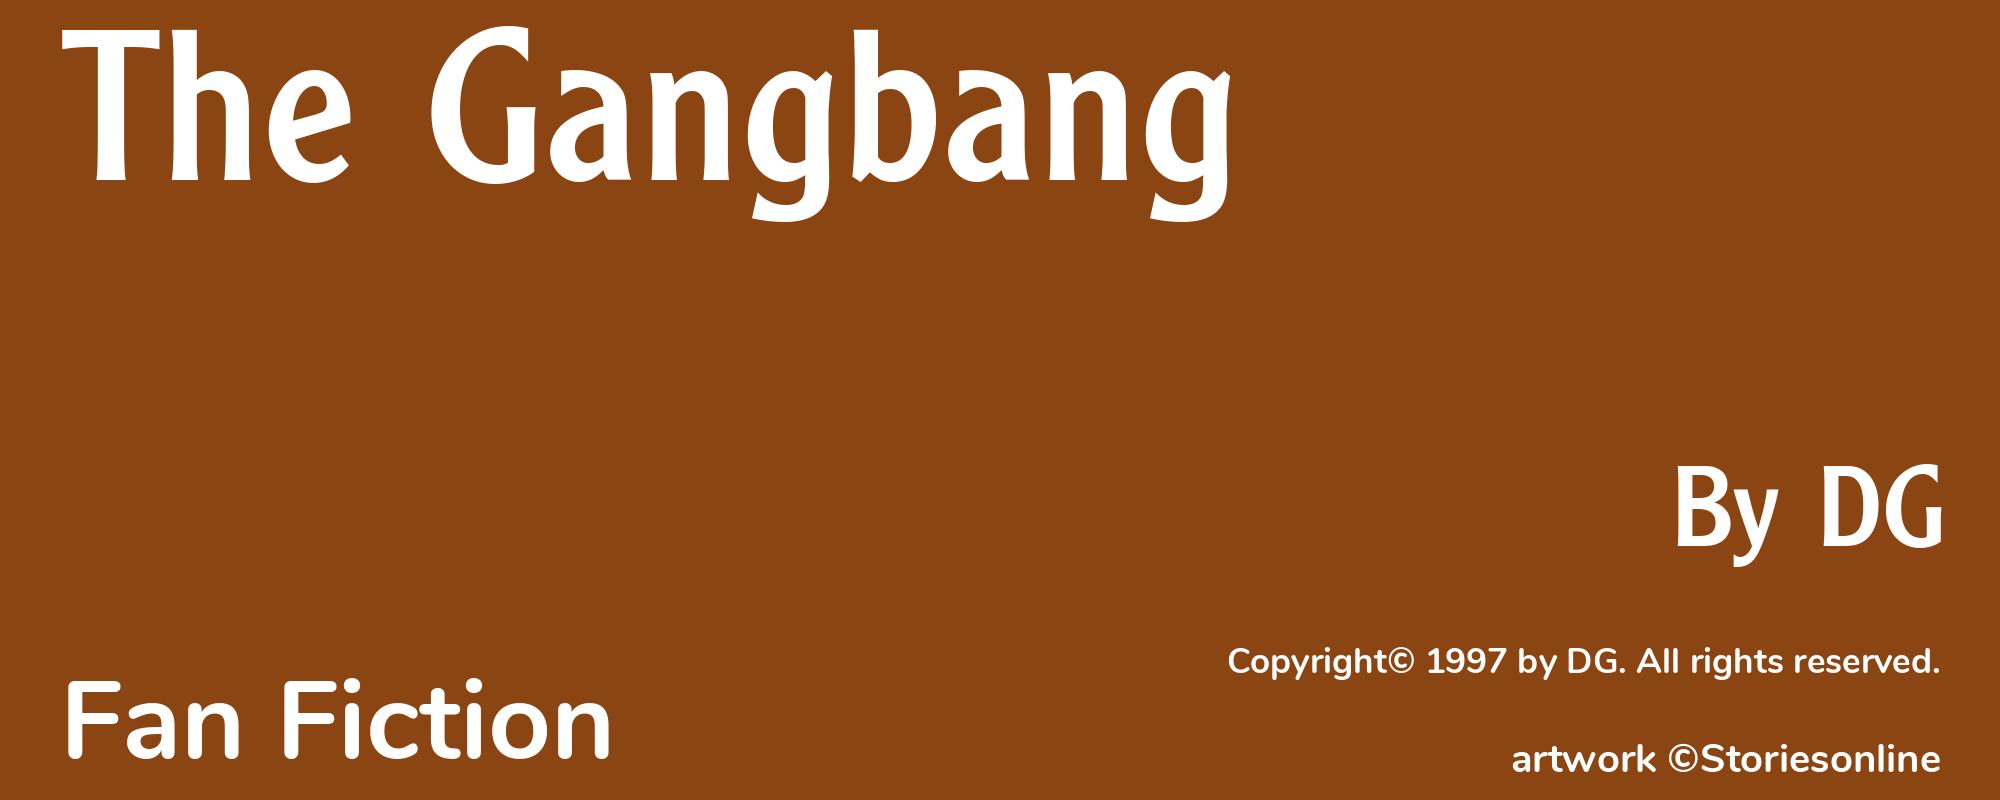 The Gangbang - Cover